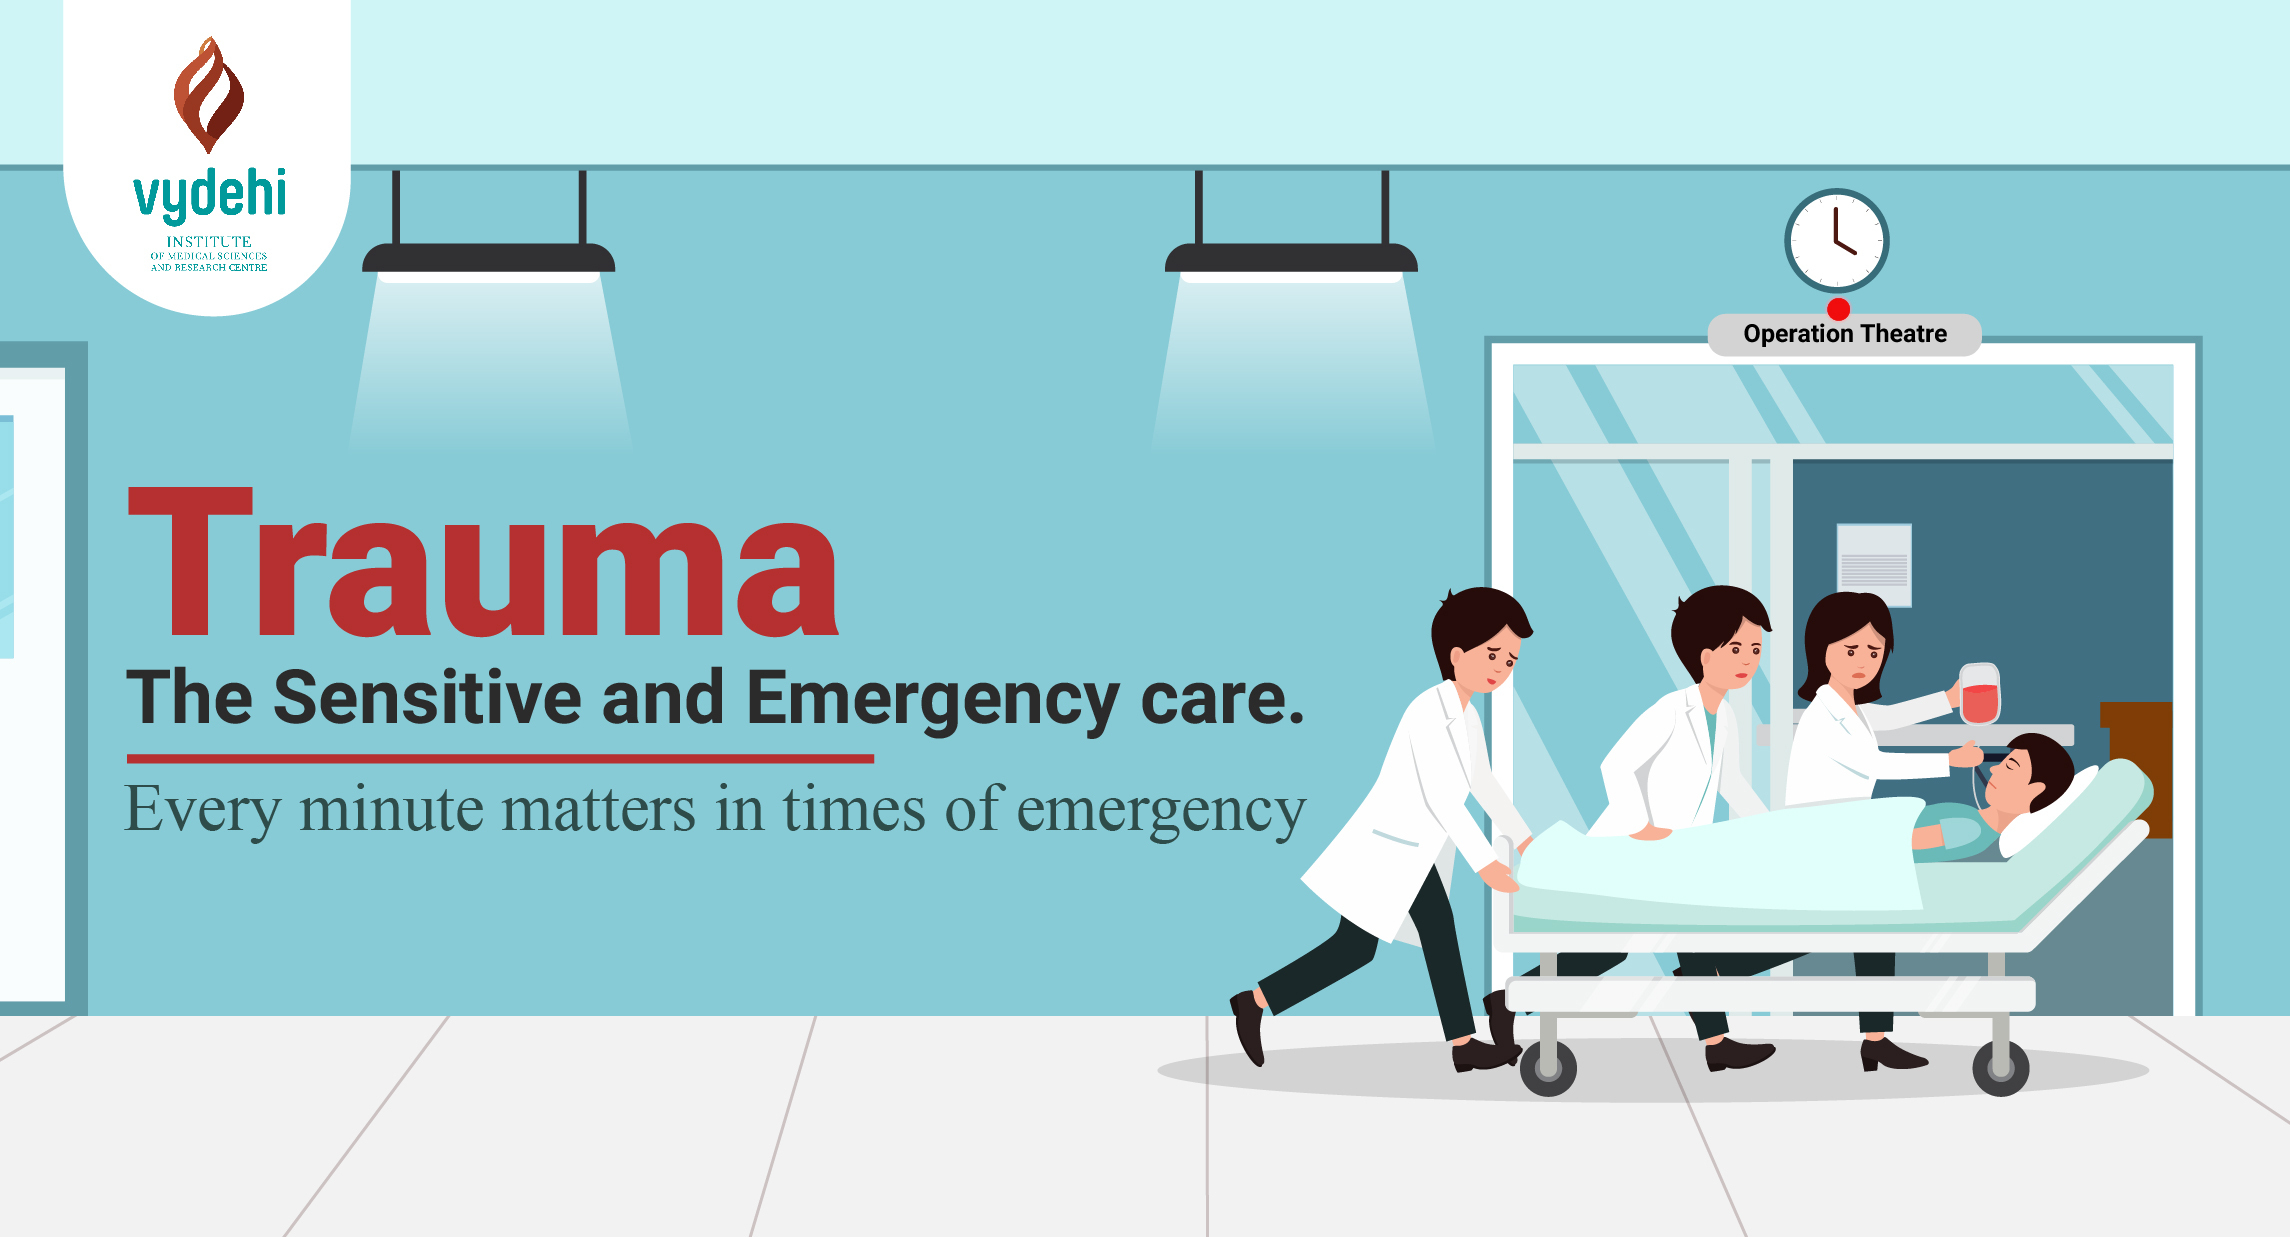 Trauma - The Sensitive and Emergency Care.